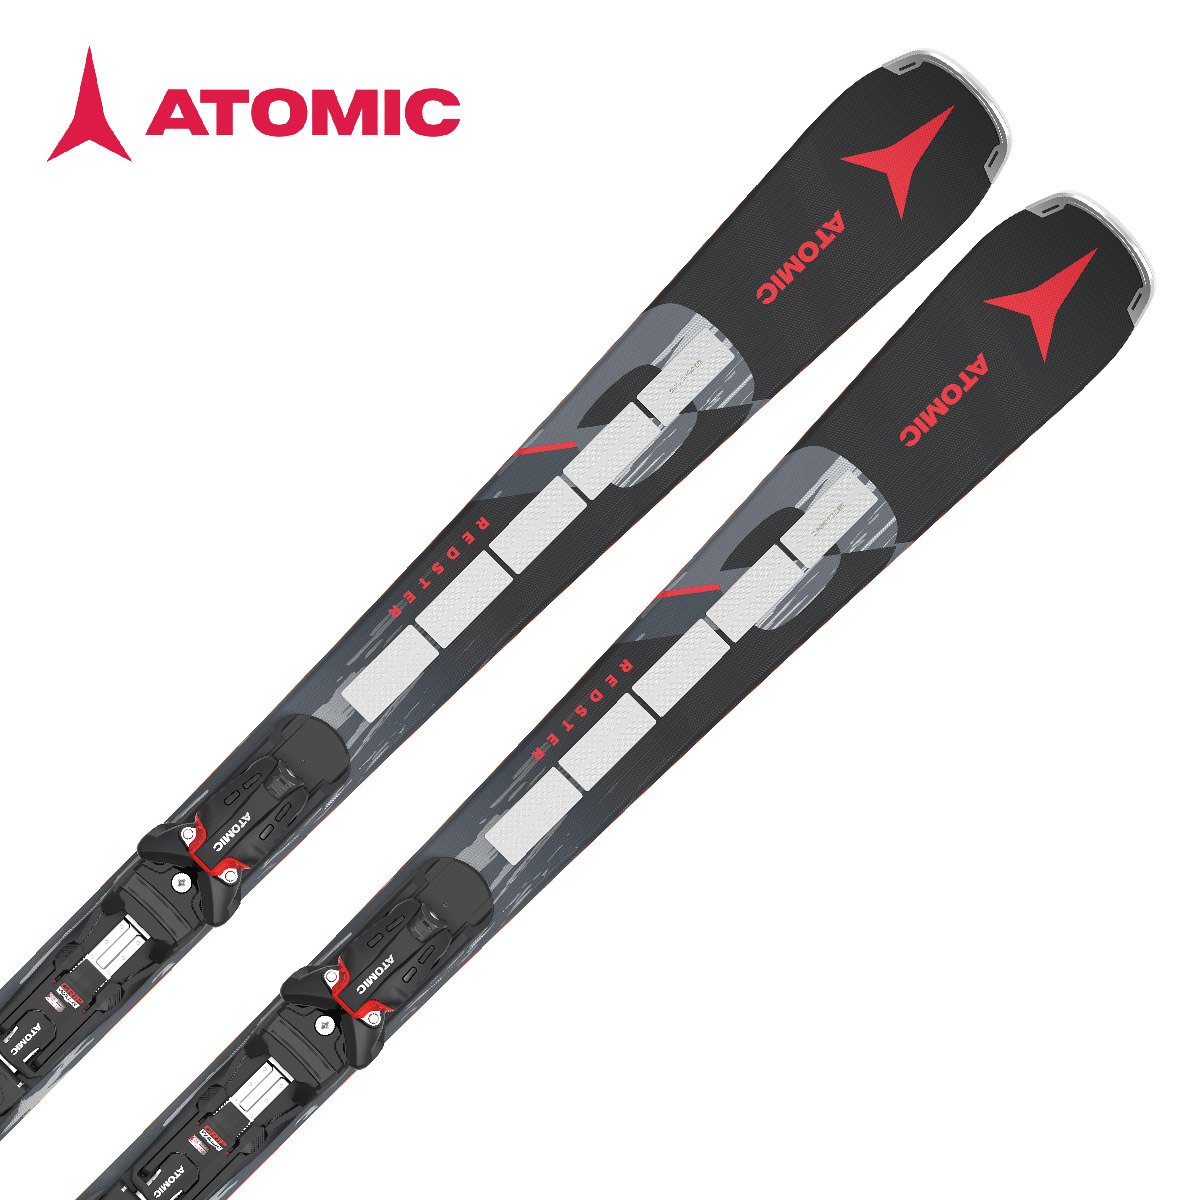 ATOMIC Q9i REVOSHOCK S + X12 GW 168cm